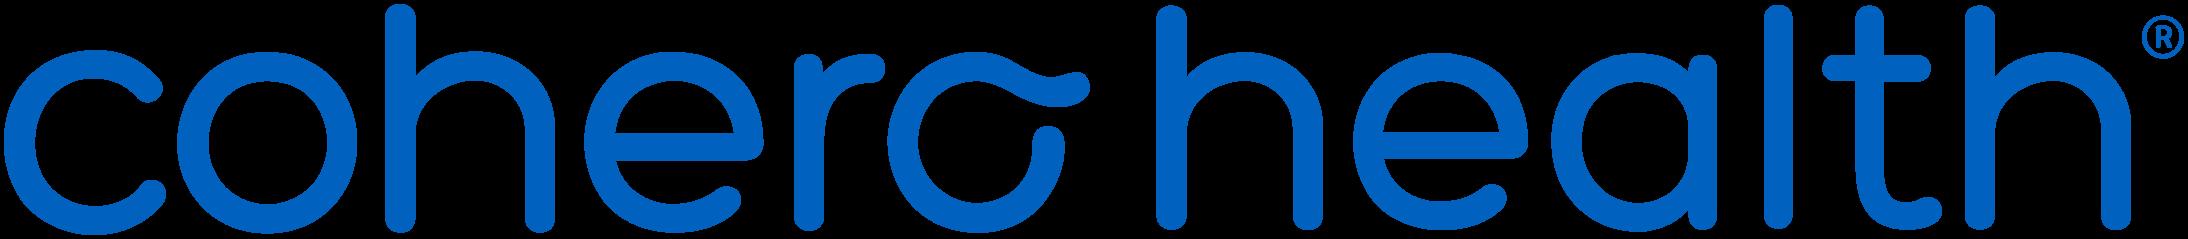 Cohero Health_logo